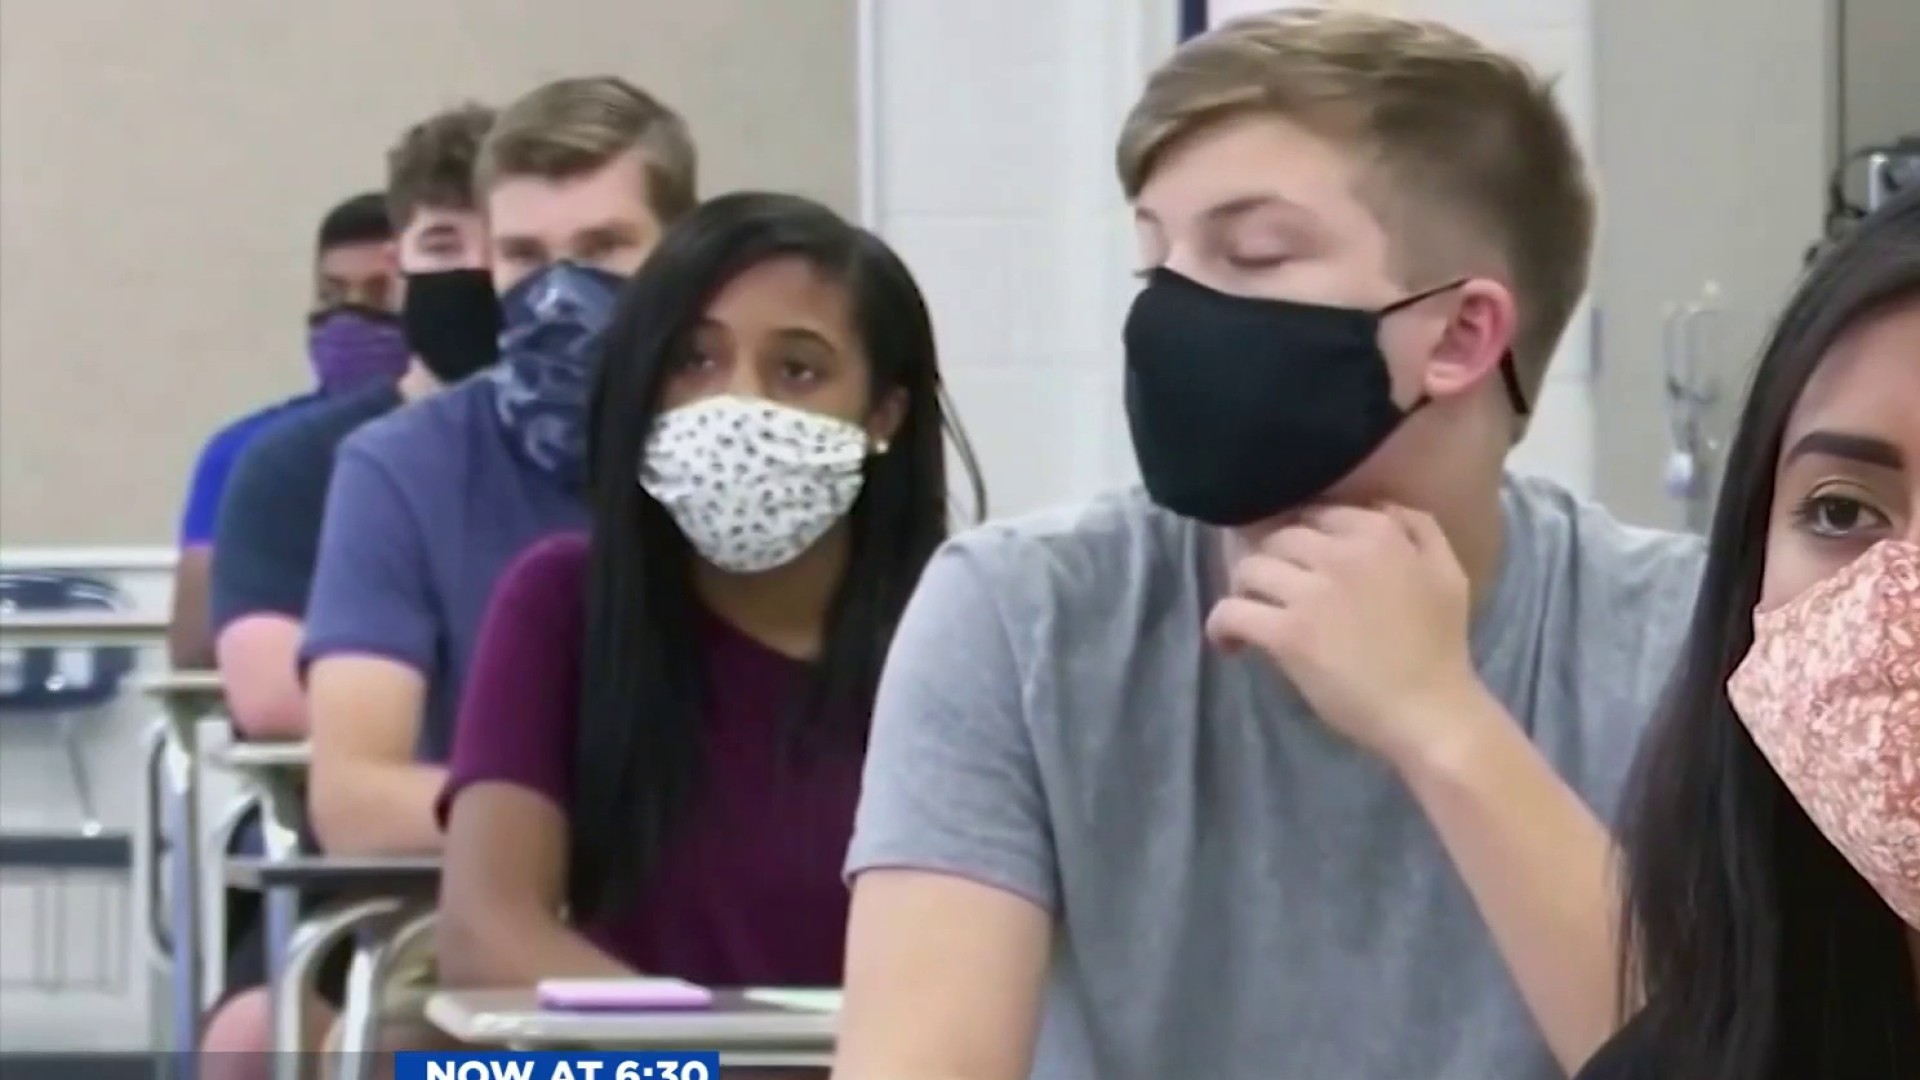 Florida judge allows school mask mandates to continue despite